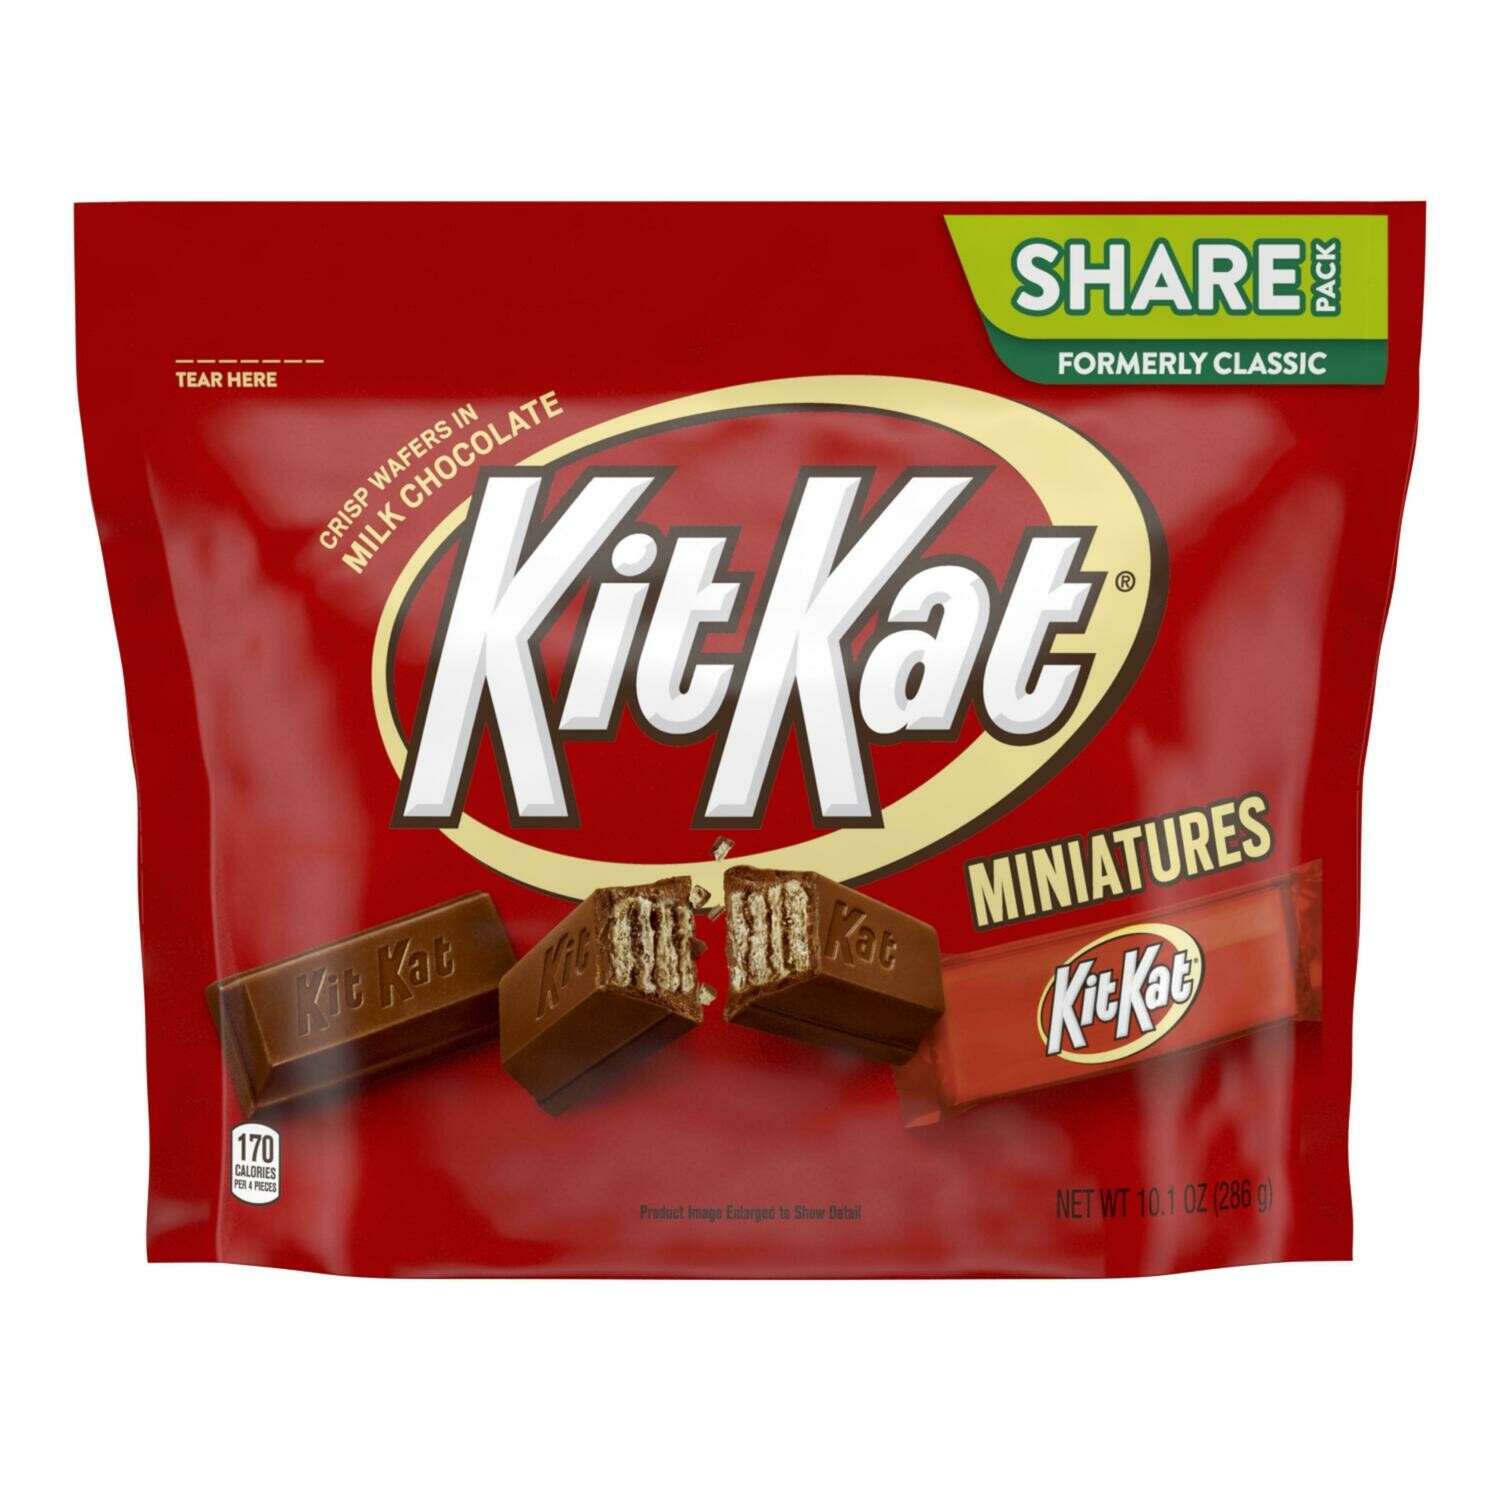 Share Pack Kit Kat